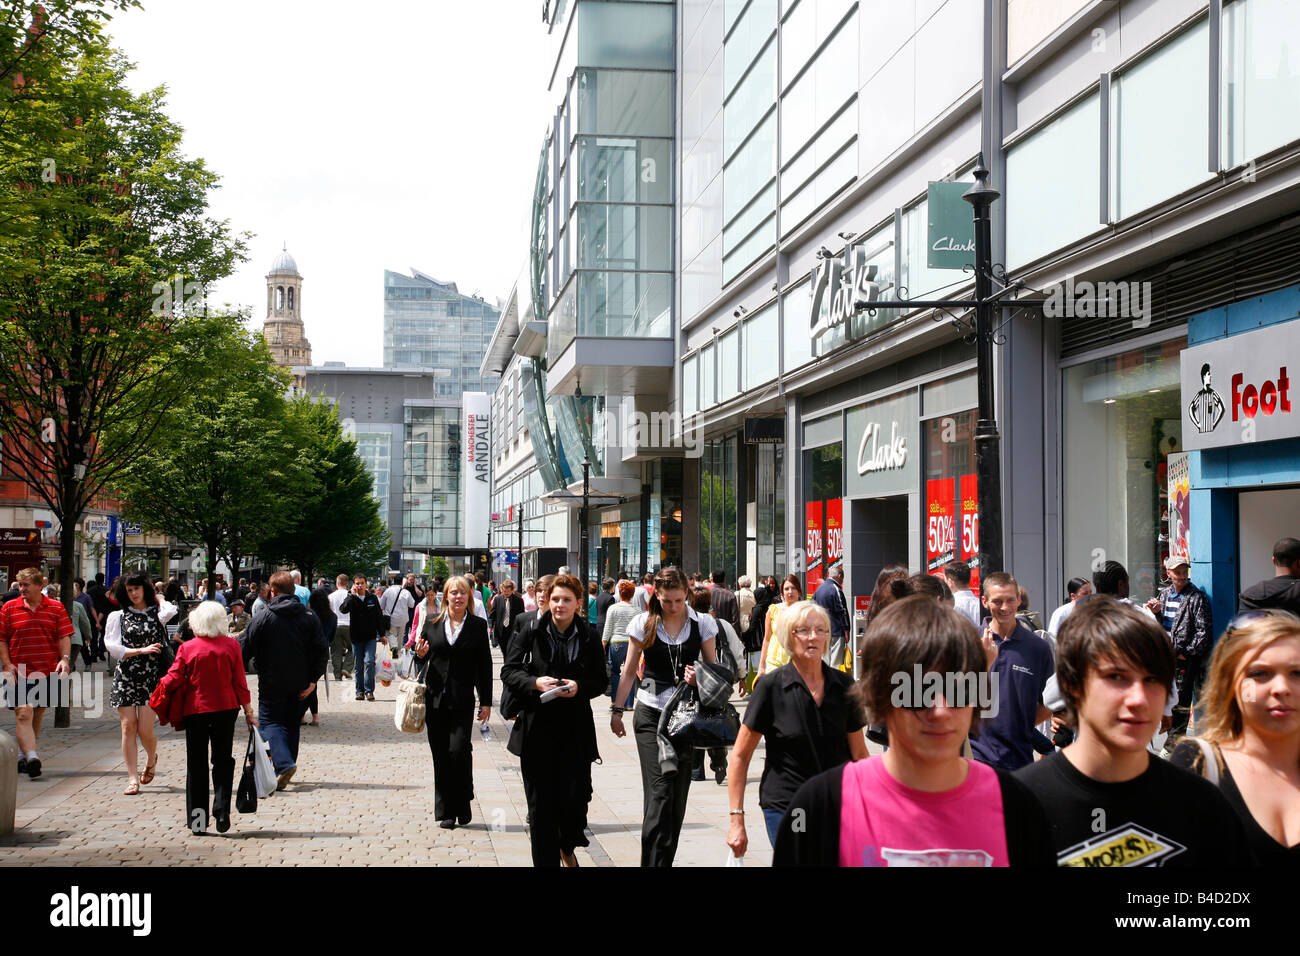 Aug 2008 - People walking along the Market street with many shops Manchester England UK Stock Photo